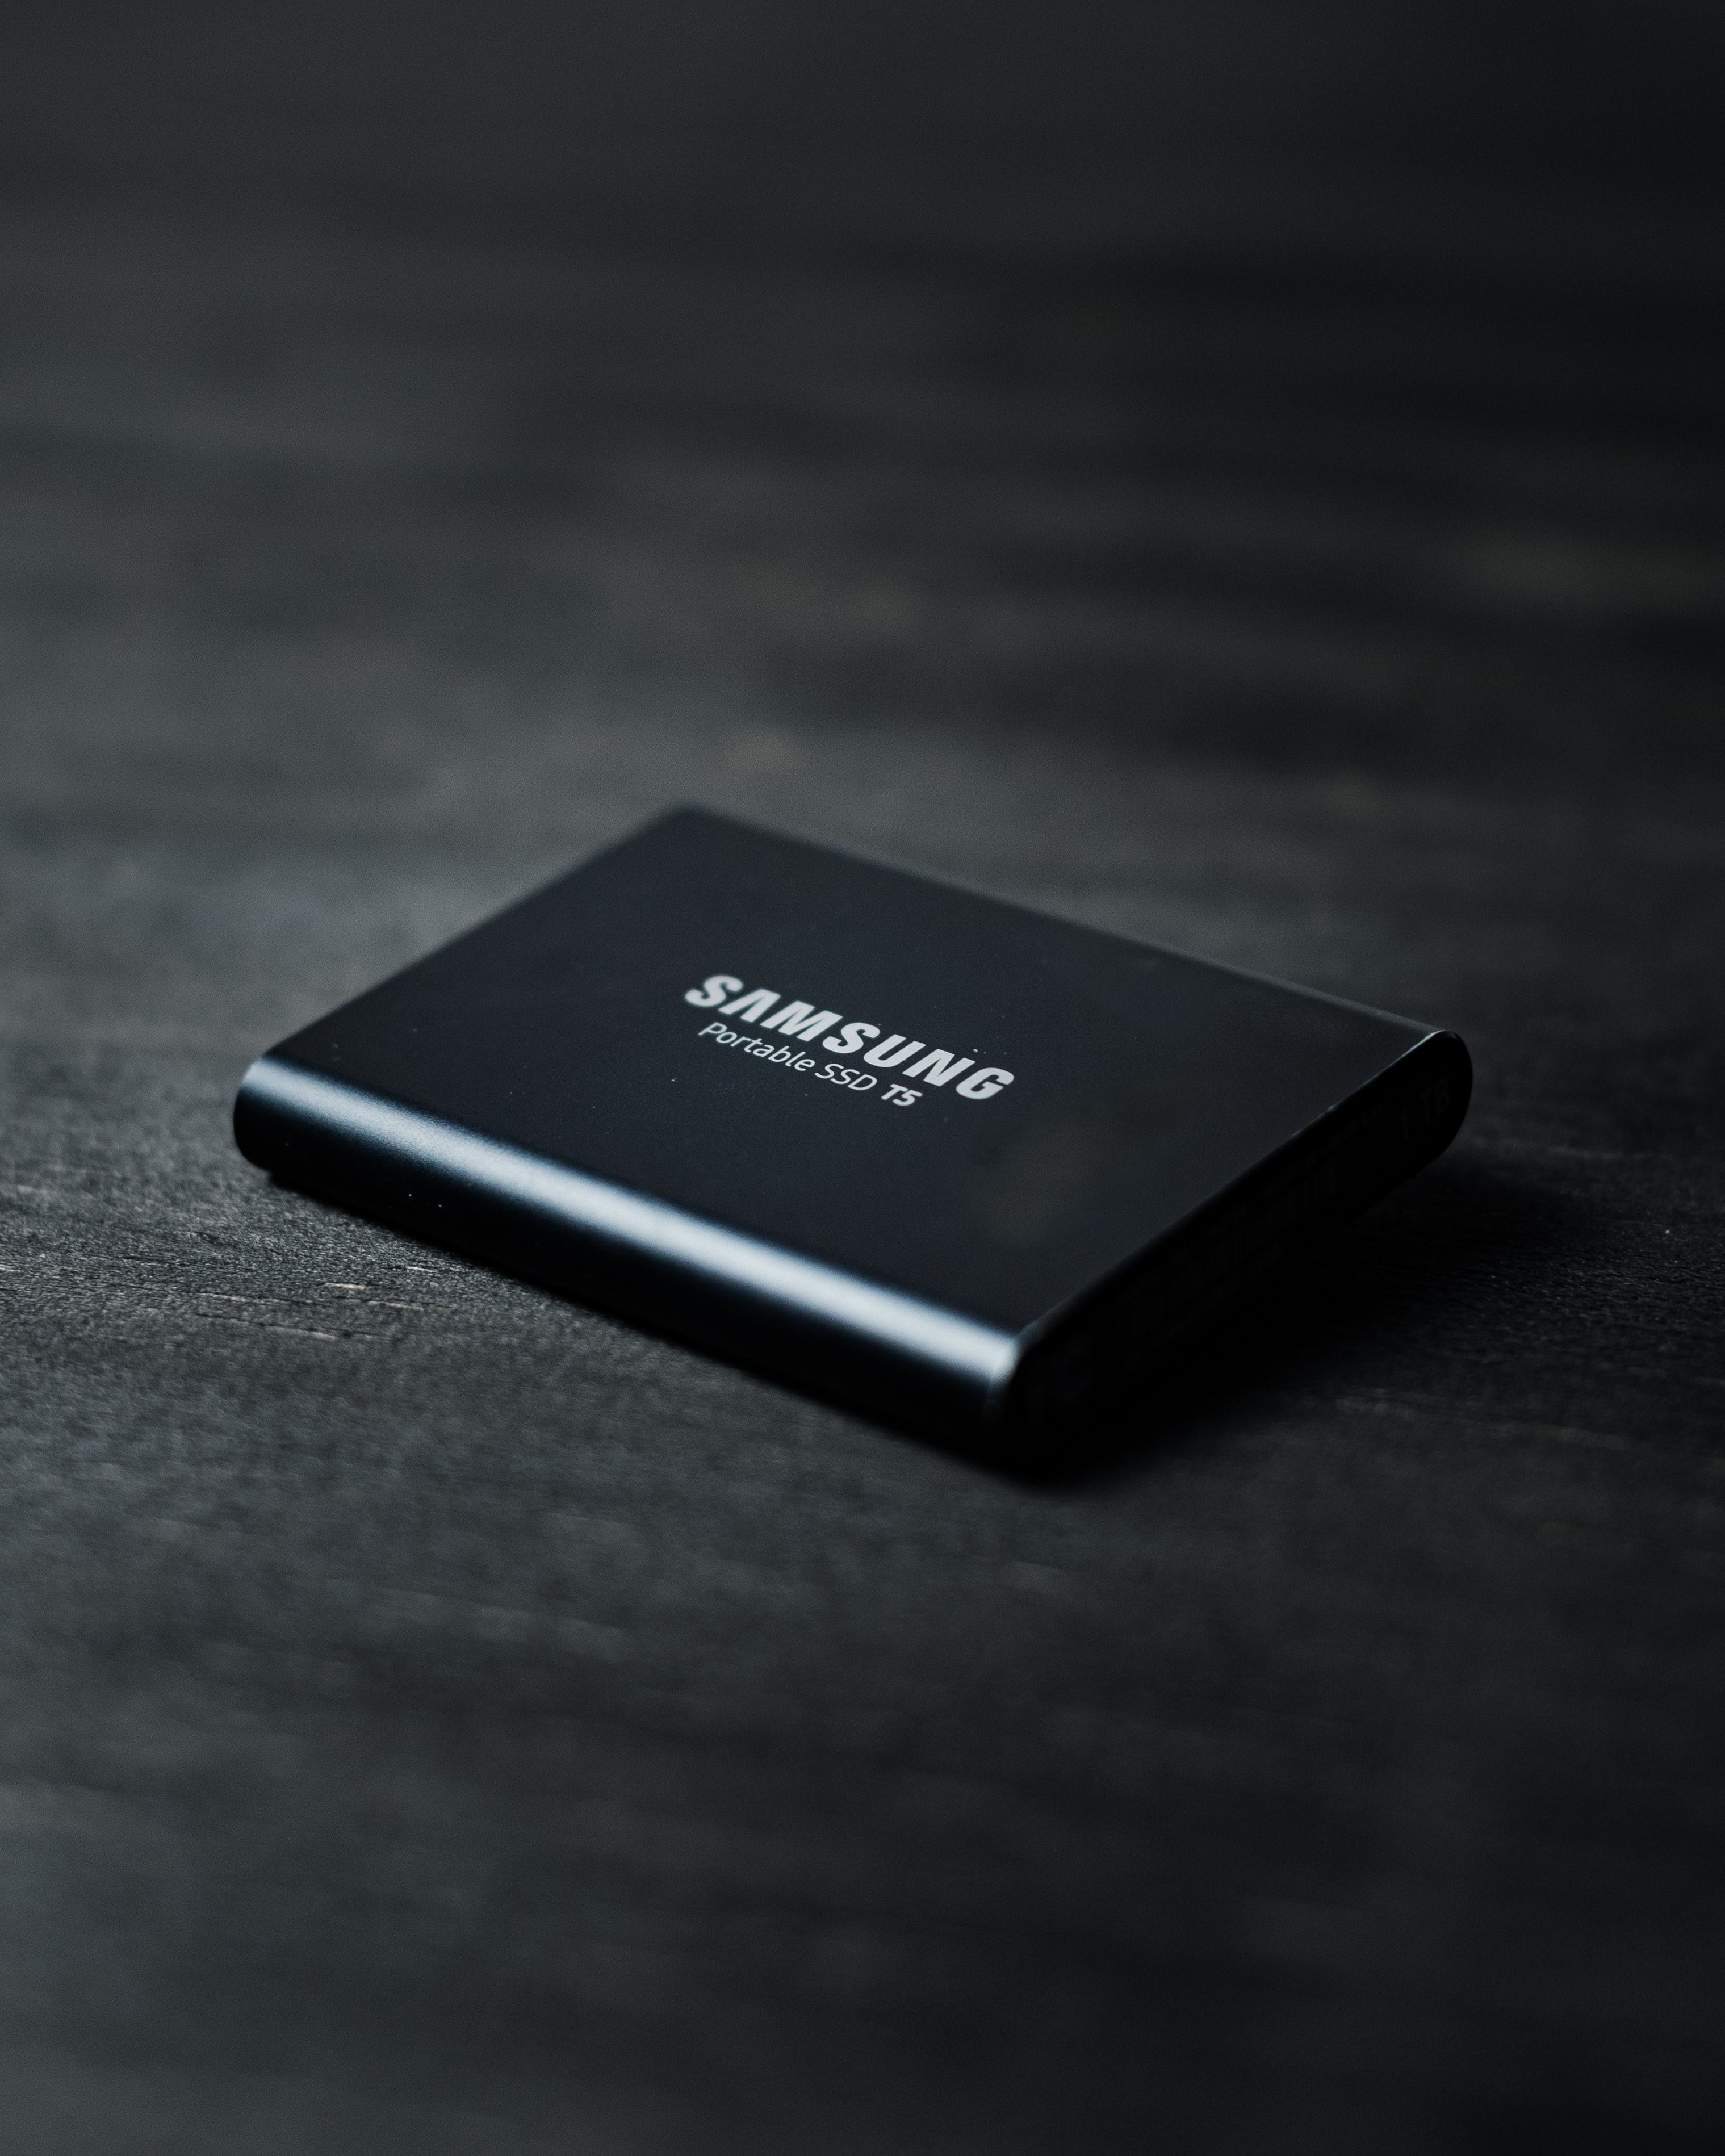 Samsung SSD on light gray surface